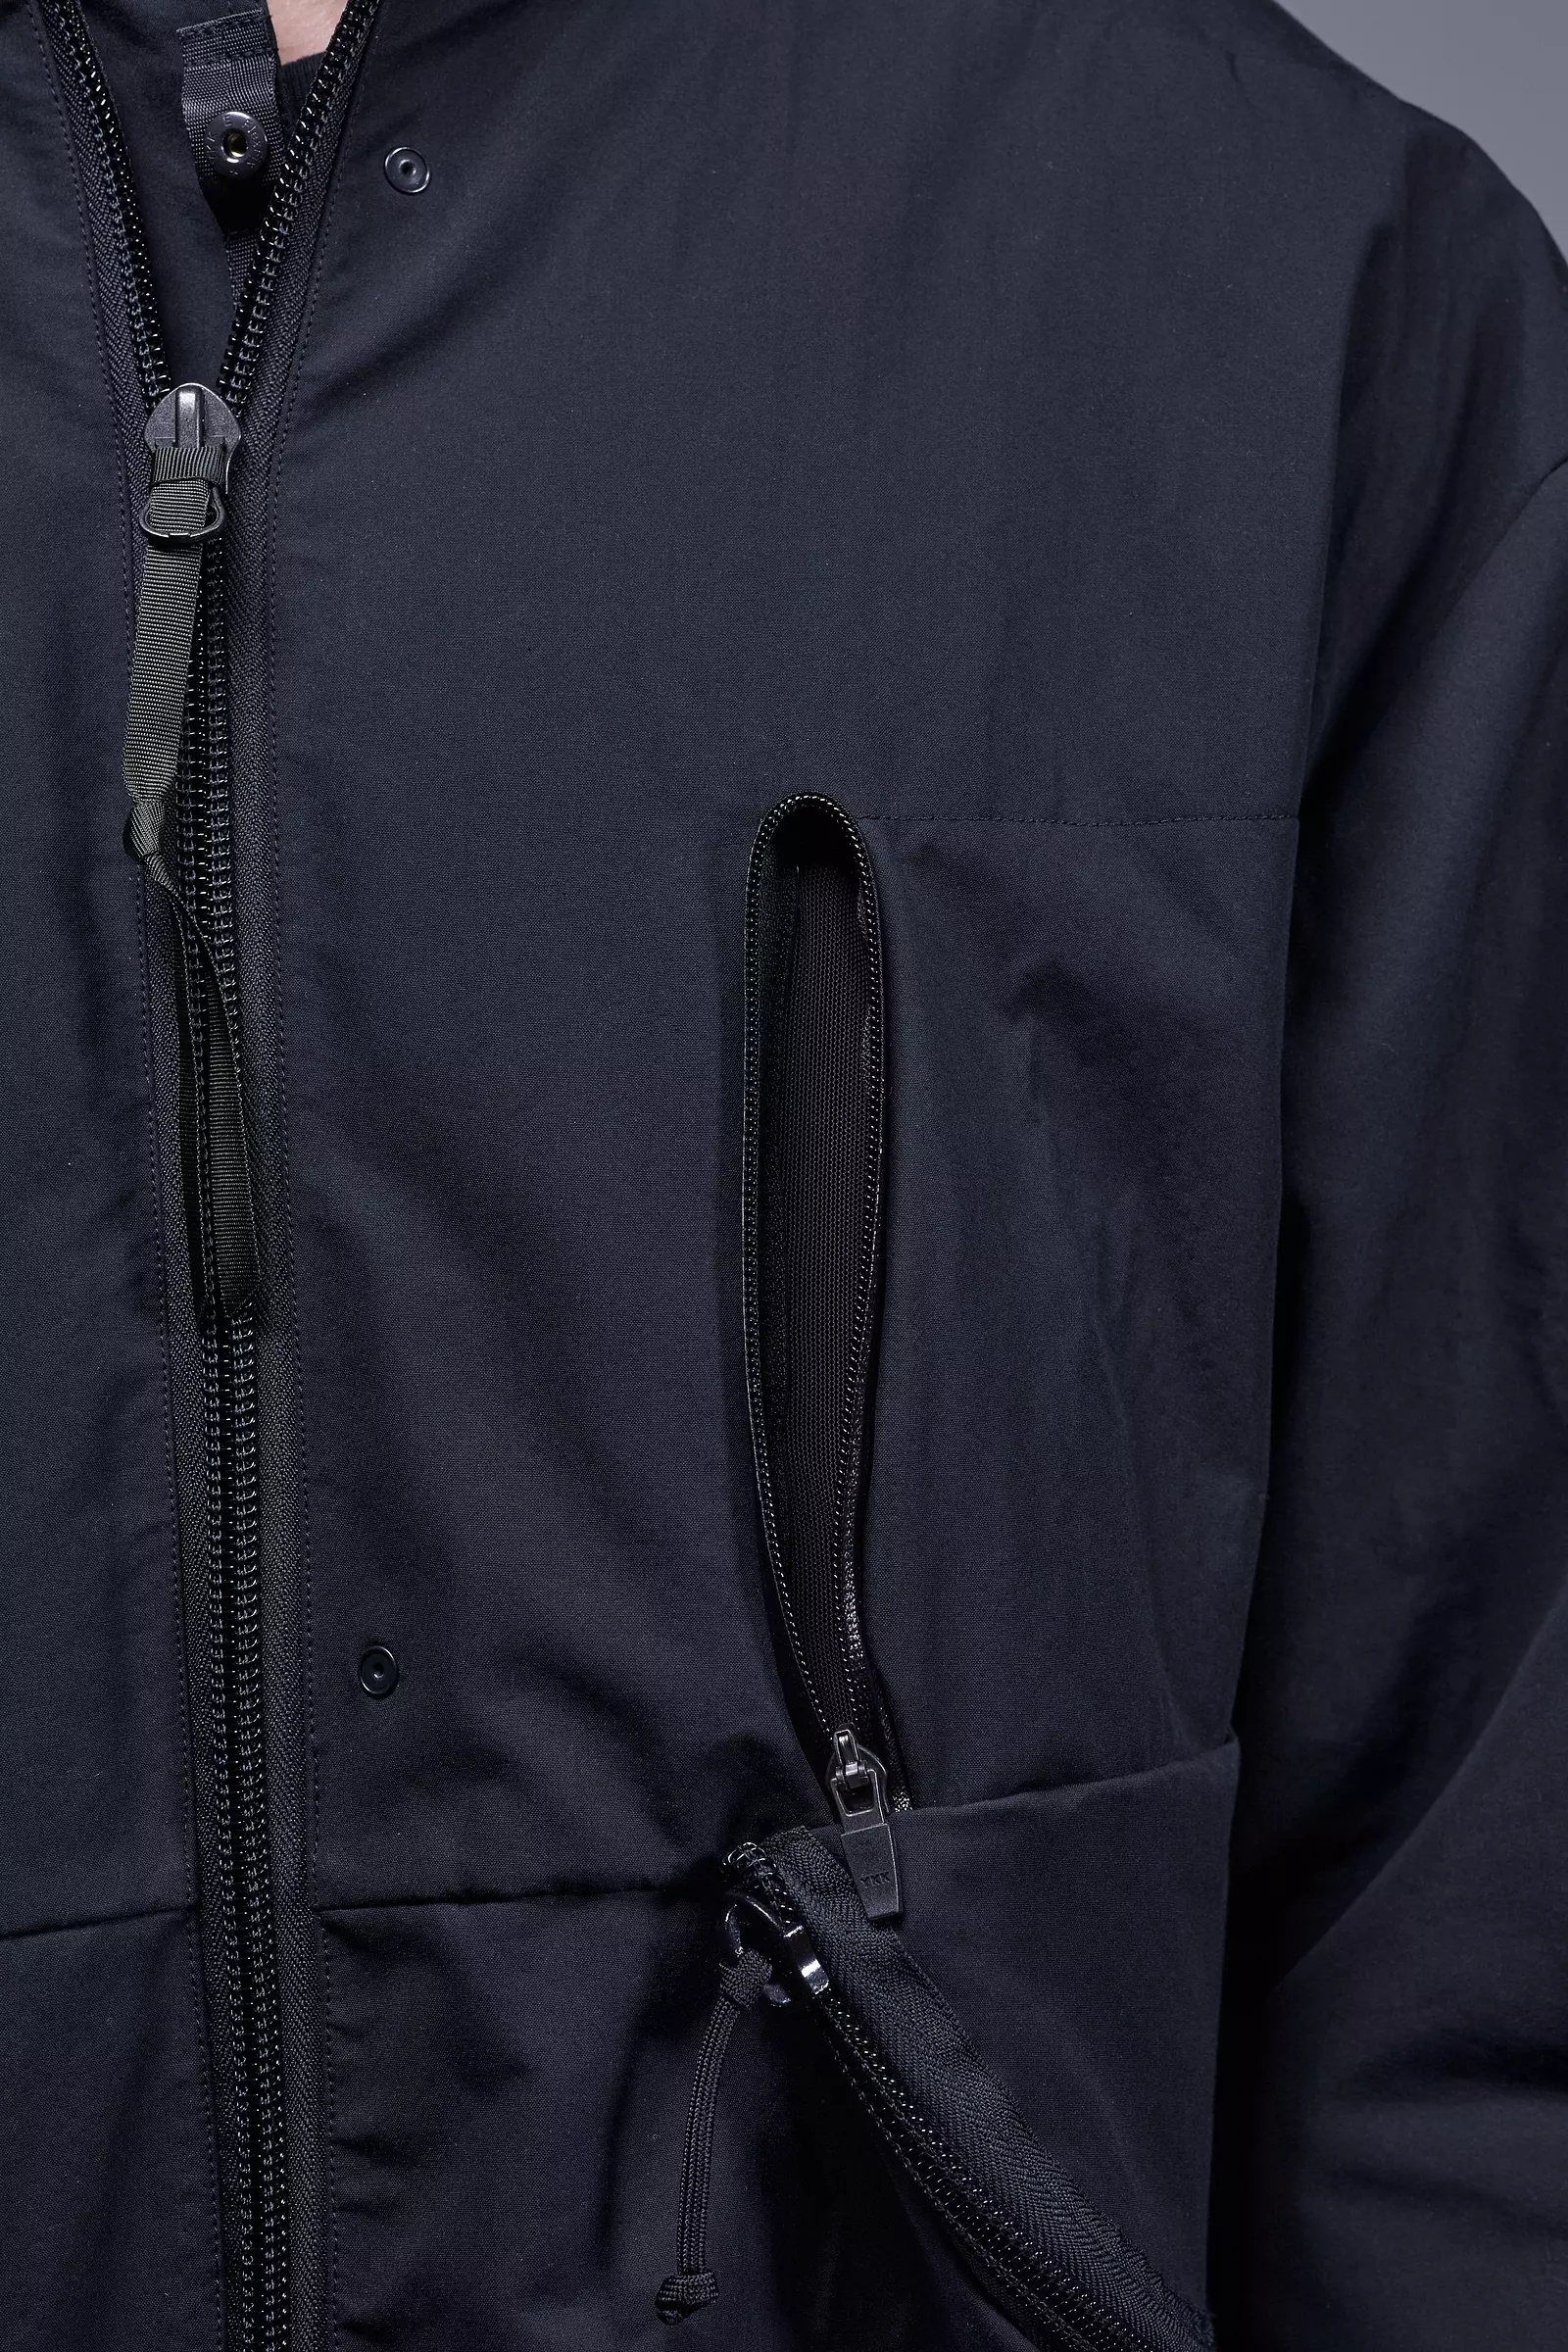 J113-SD Stotz® EtaProof™ Double Layer Weave Jacket Black - 27